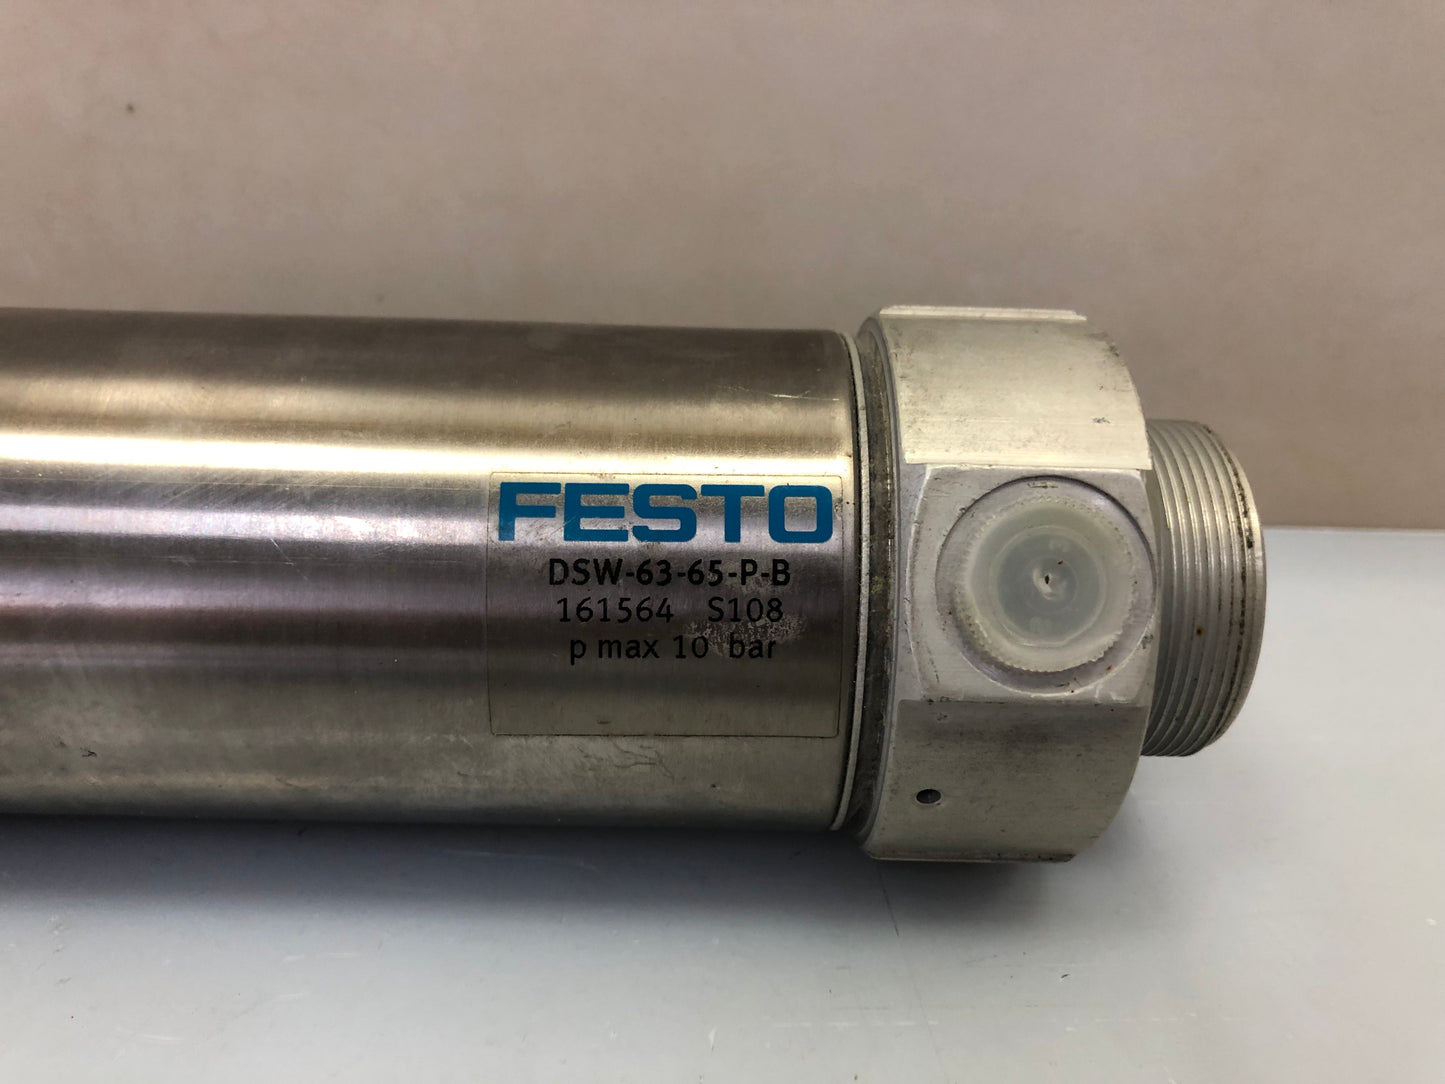 FESTO cylinder DSW-63-65-P-B 161564 S108